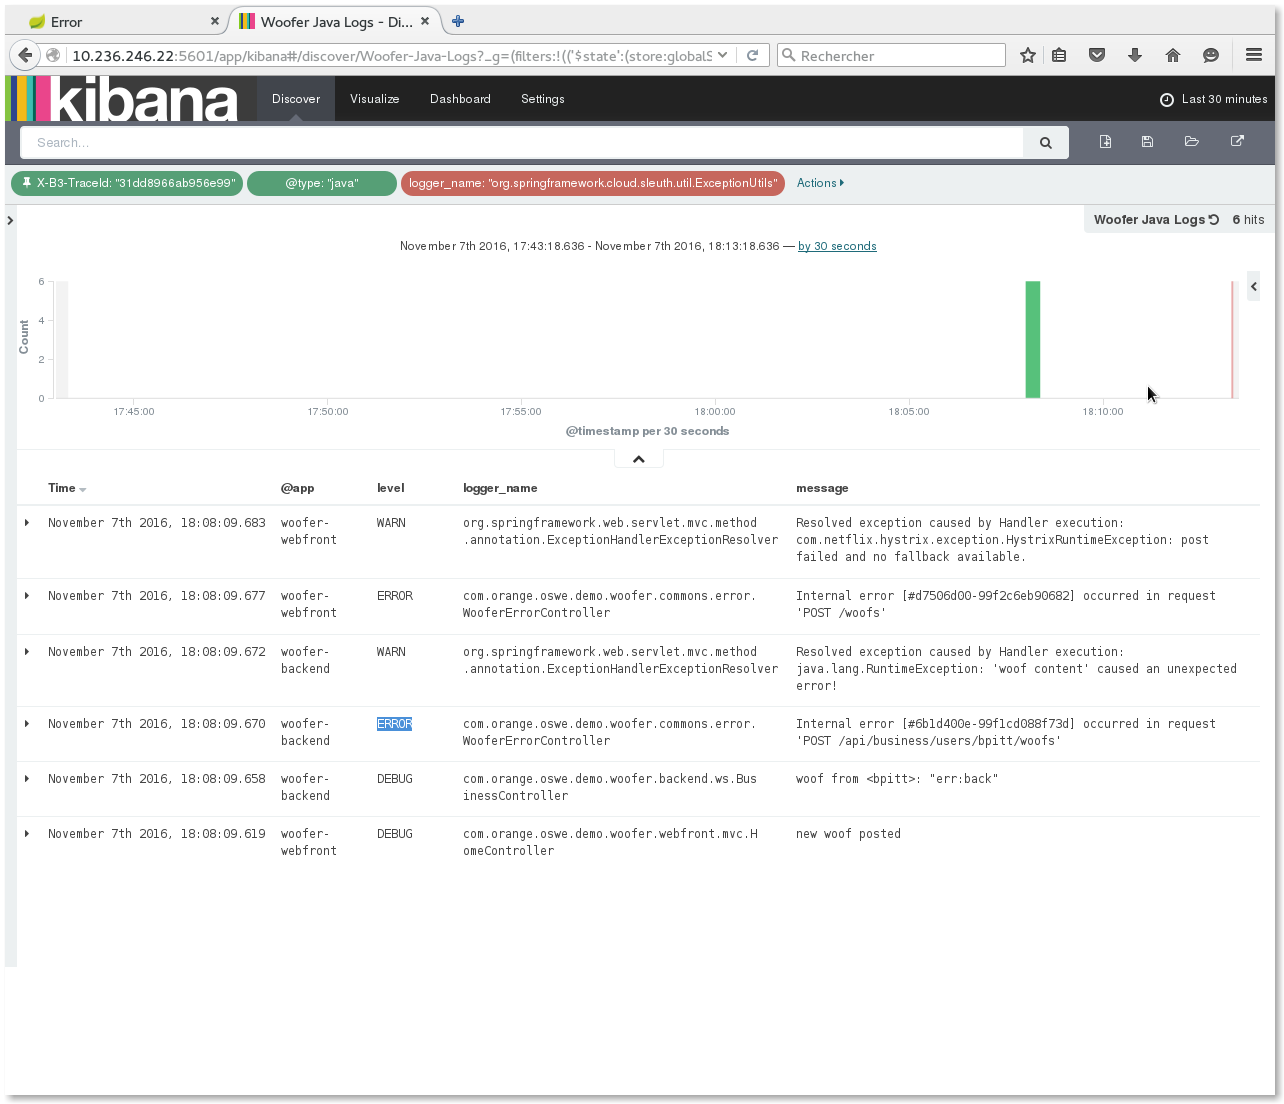 Kibana: Java logs by trace ID